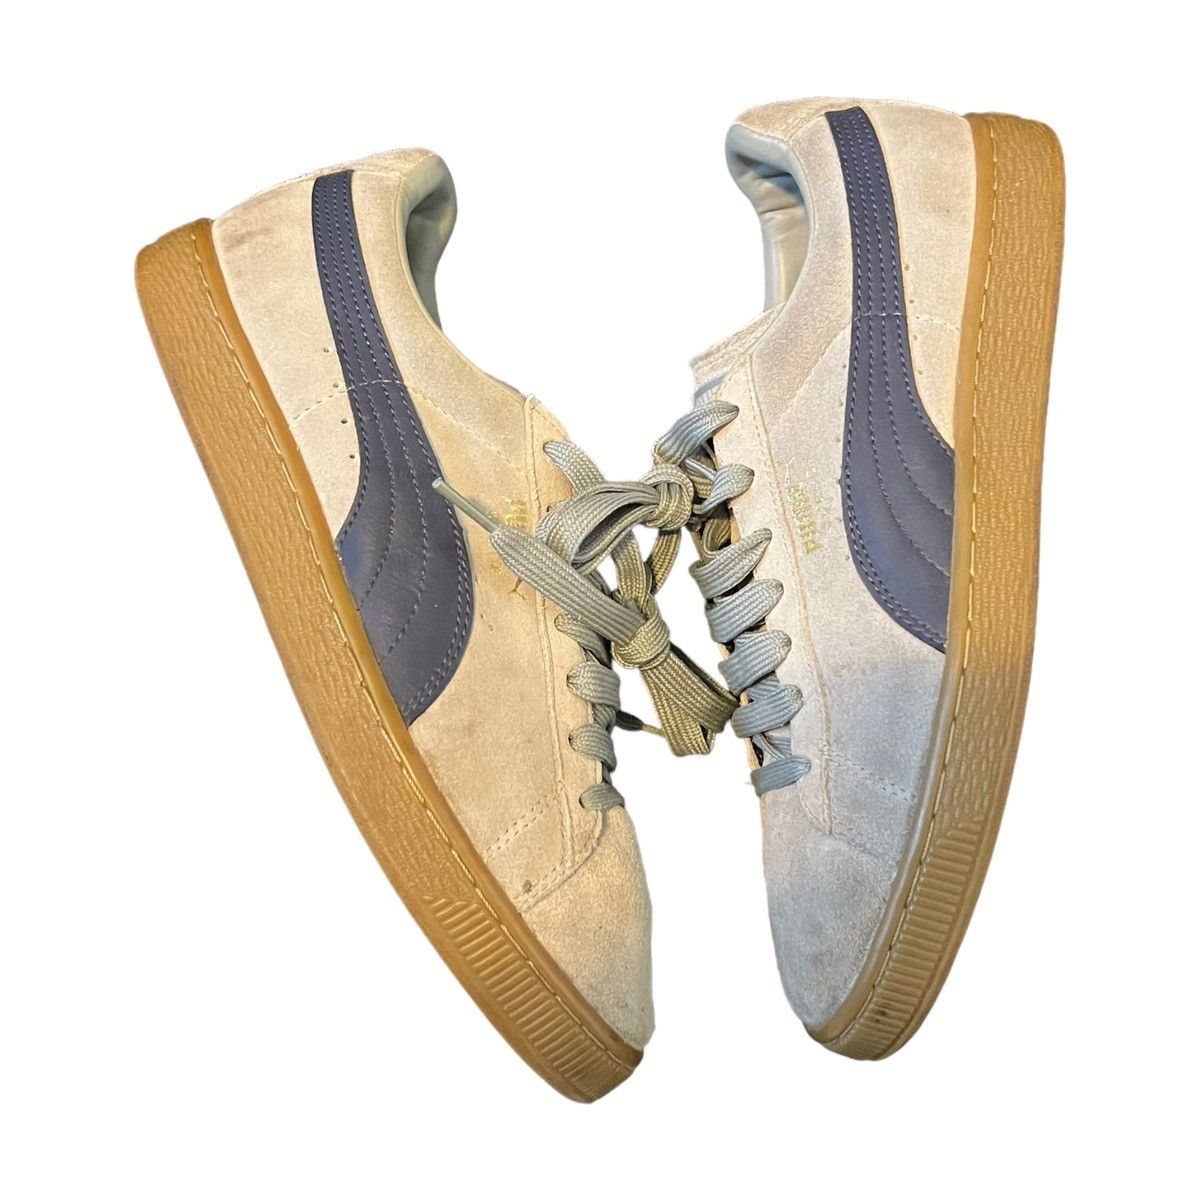 Vintage Puma Suede Classic XXI Sneakers Size US 8.5 / EU 41-42 - 2 Preview